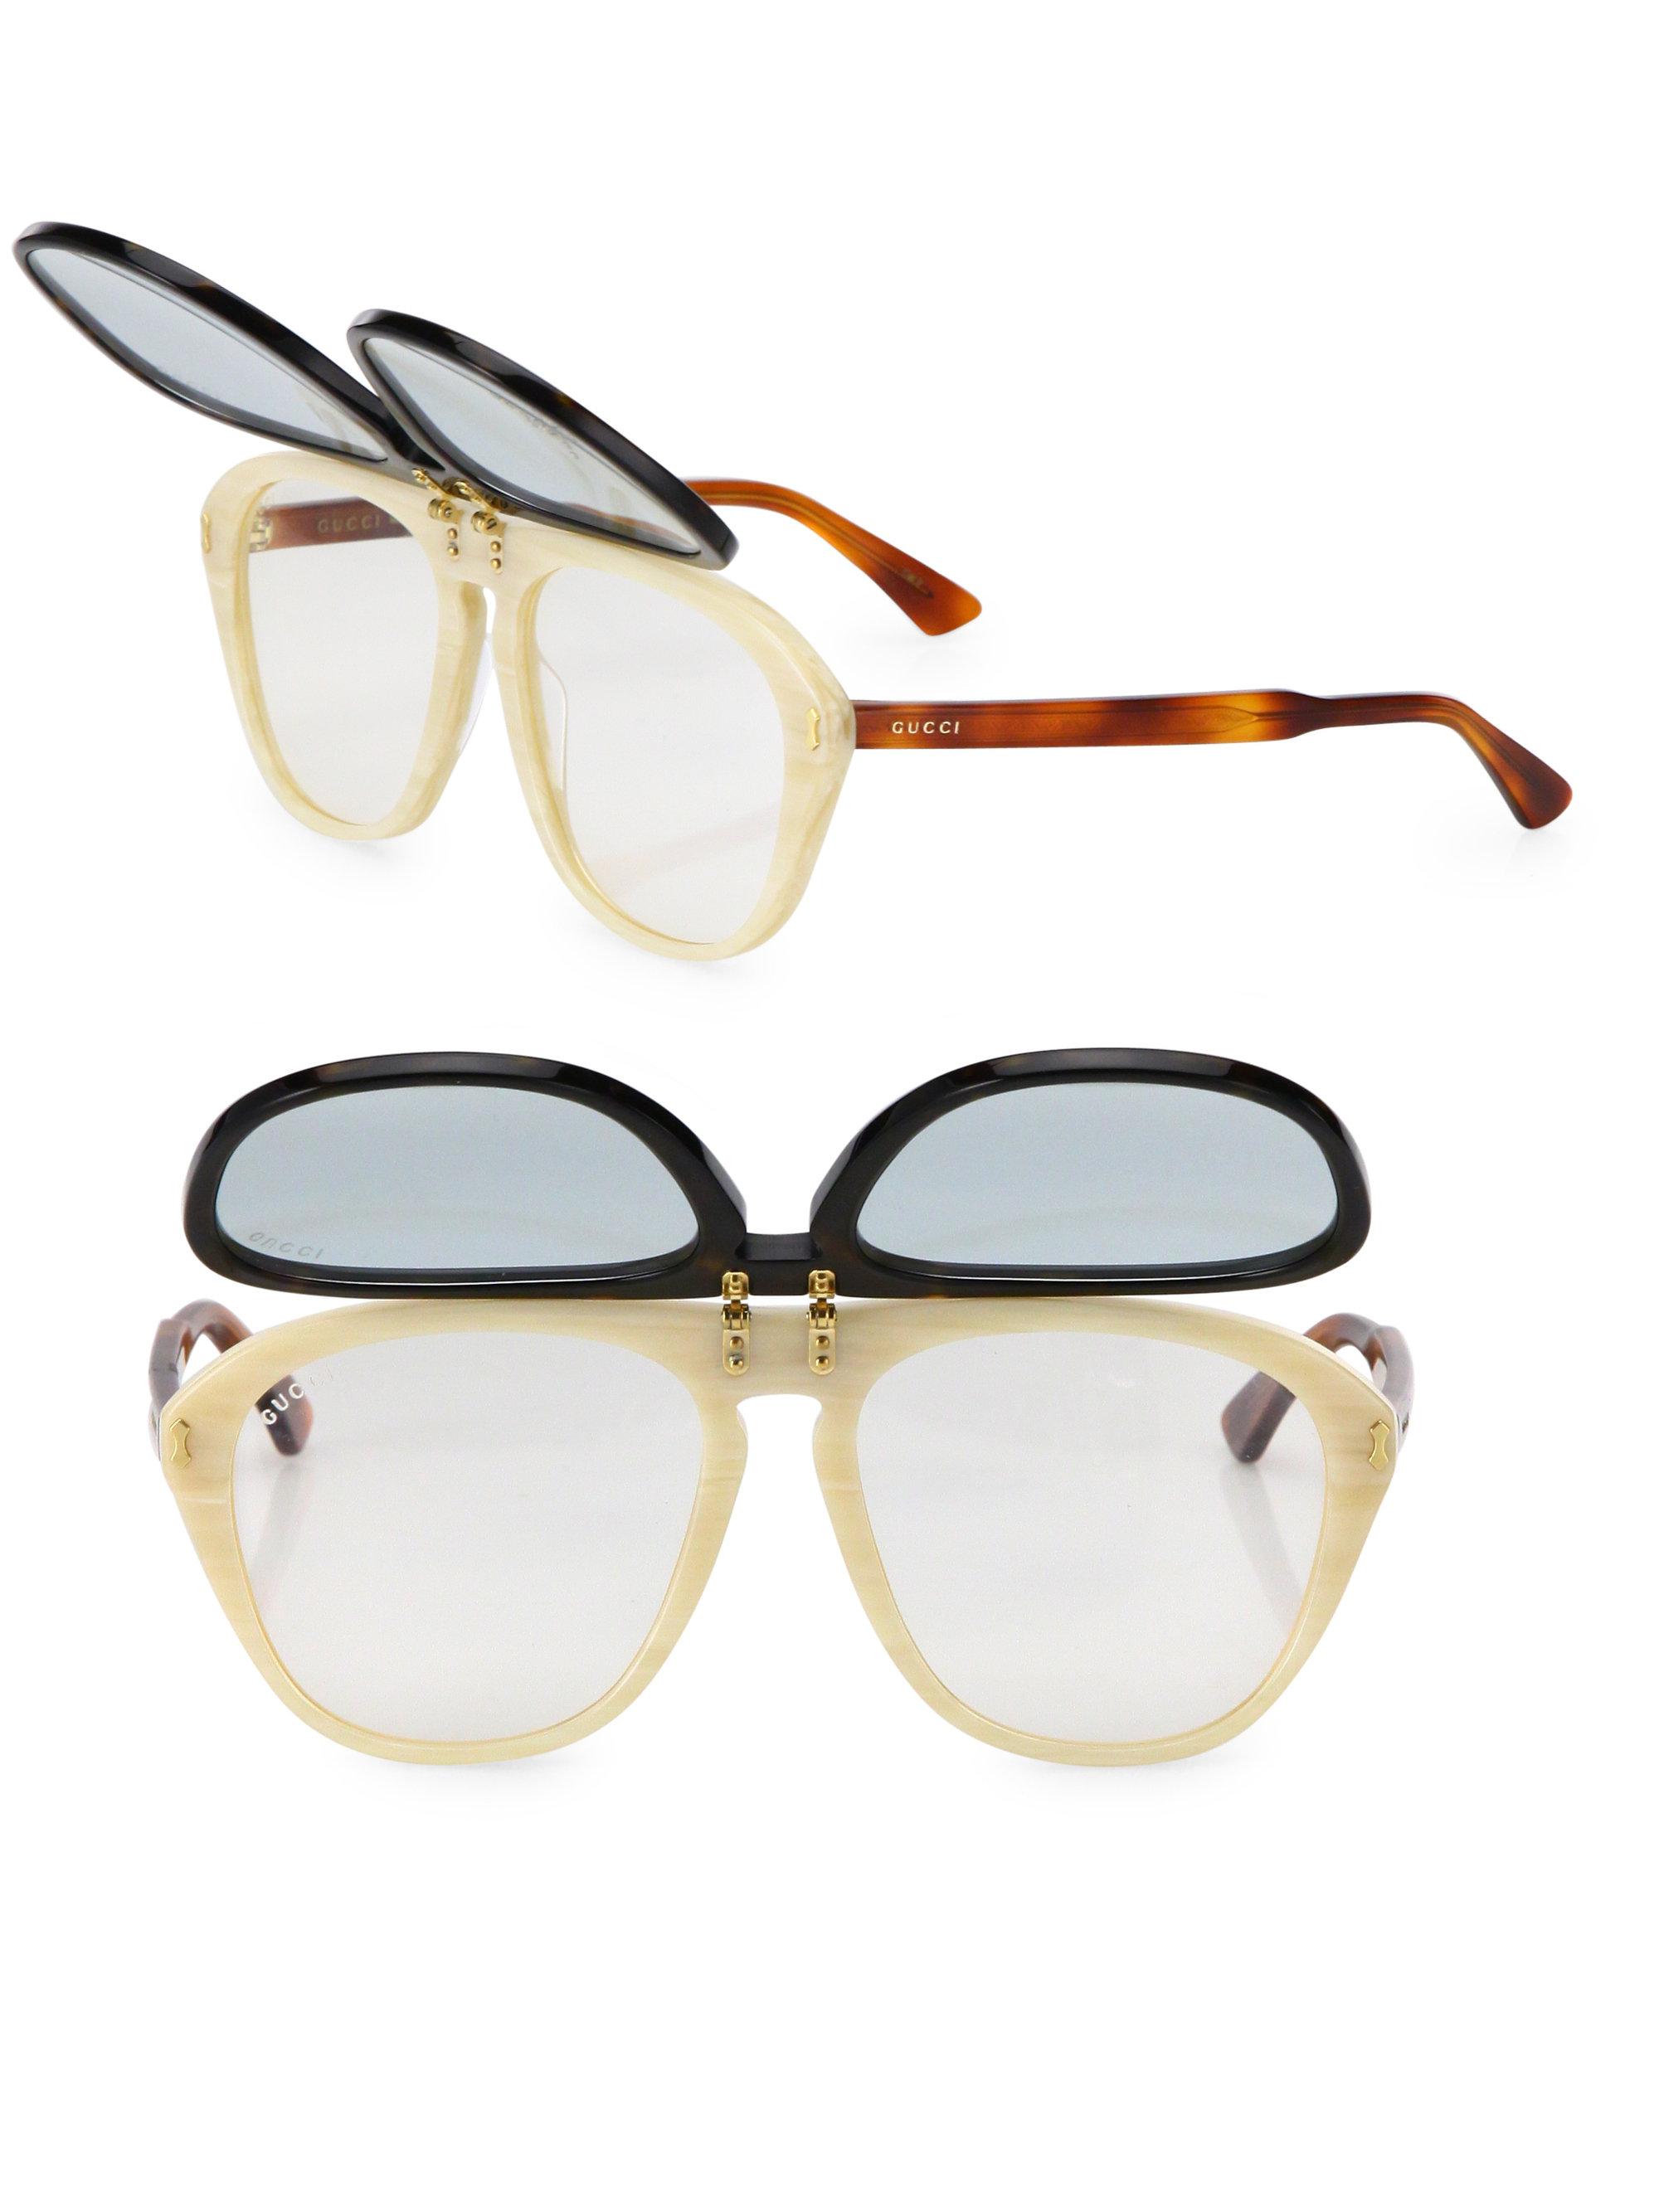 Gucci 56mm Flip-up Pilot Sunglasses for Men - Lyst